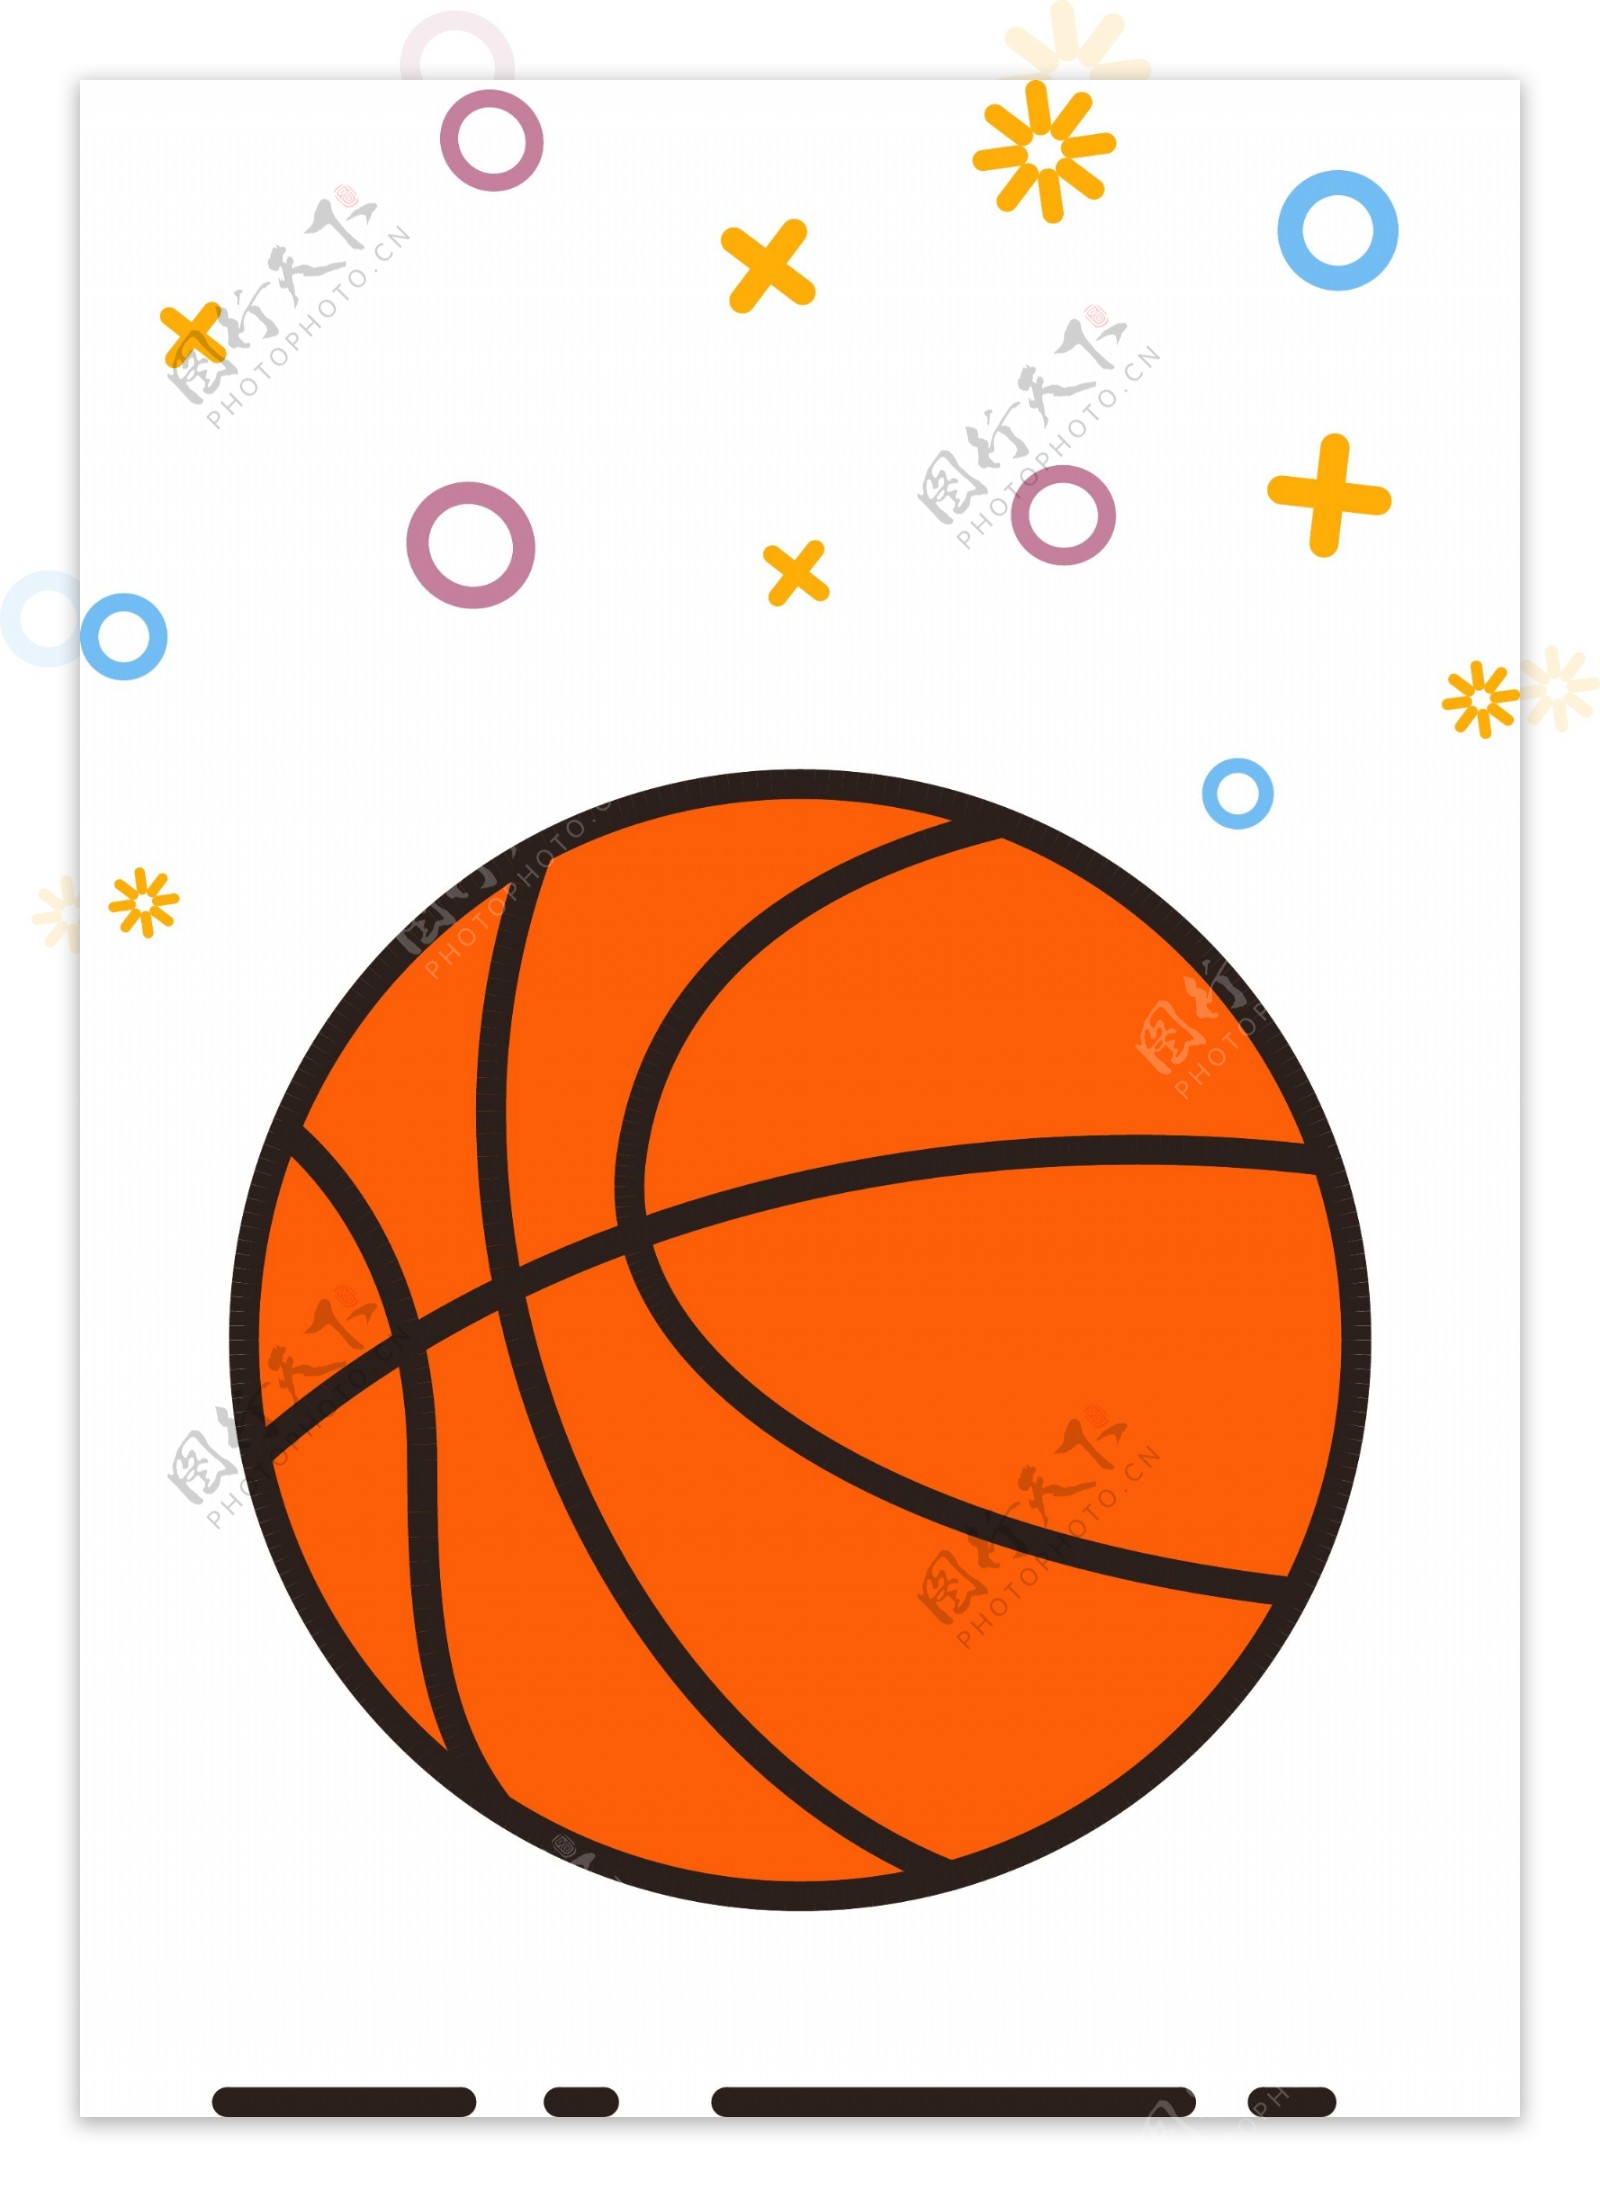 MBE图标卡通篮球橙色手绘矢量可商用素材